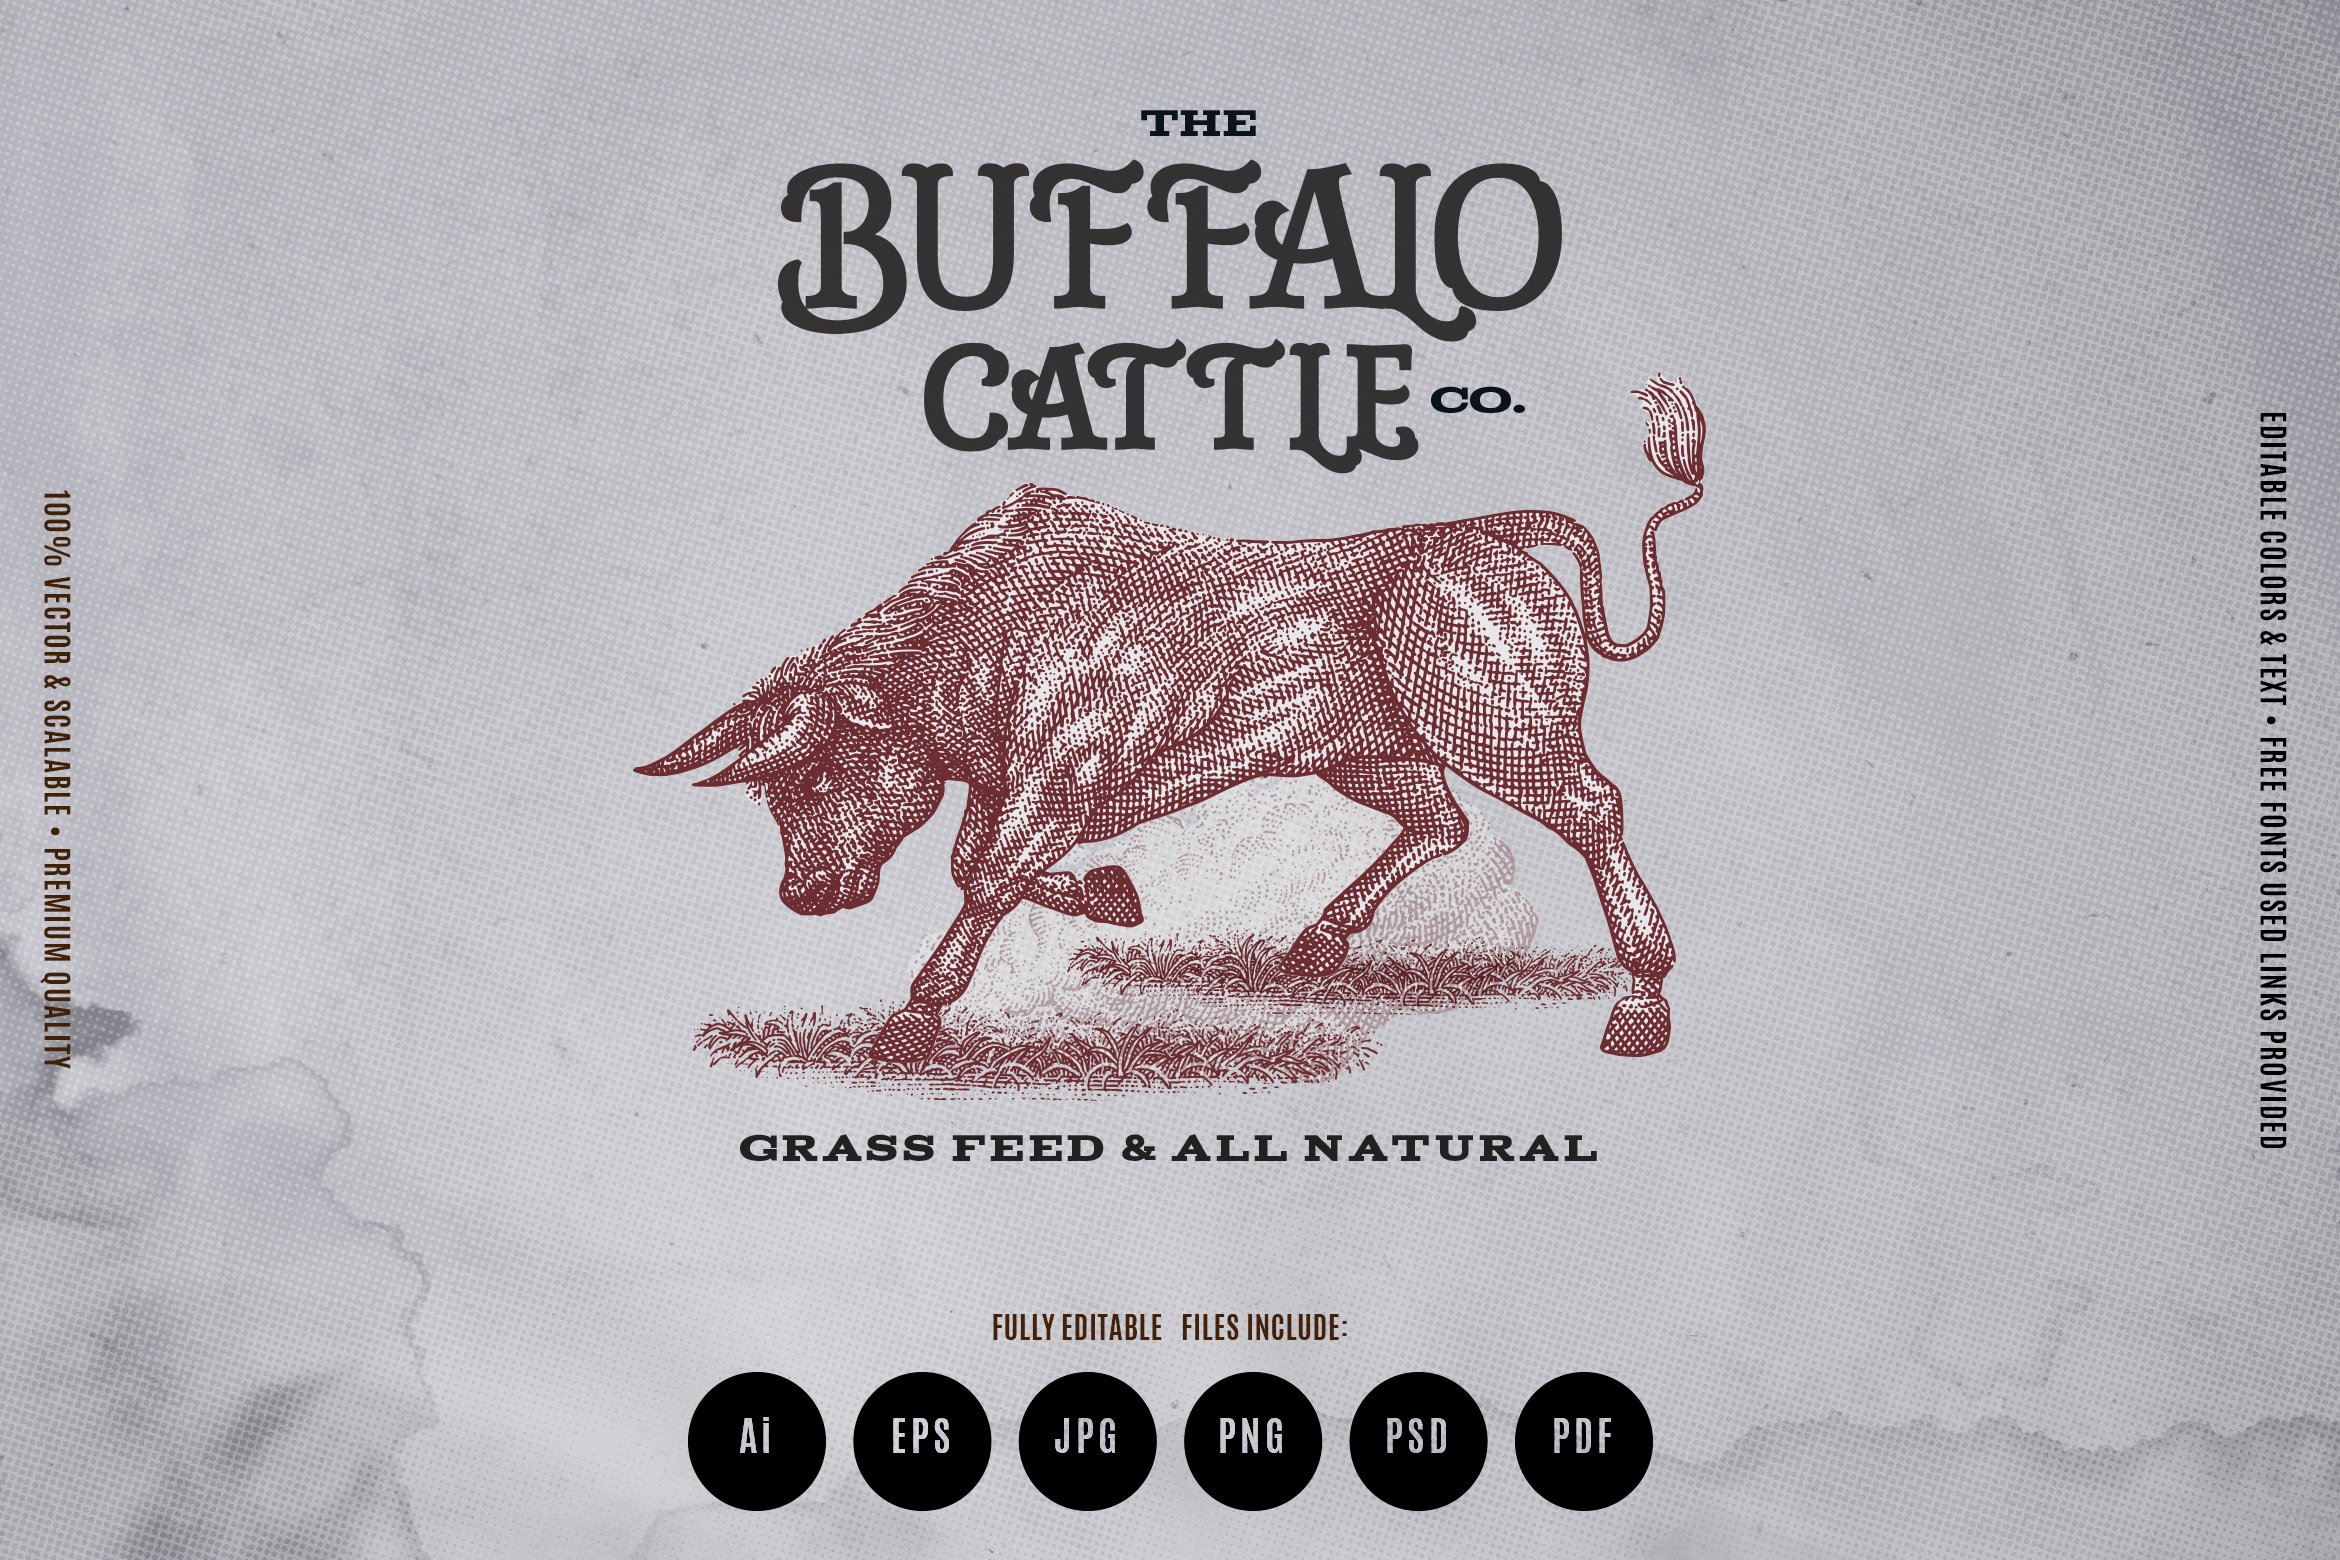 Angry Buffalo Engraving Logo cover image.